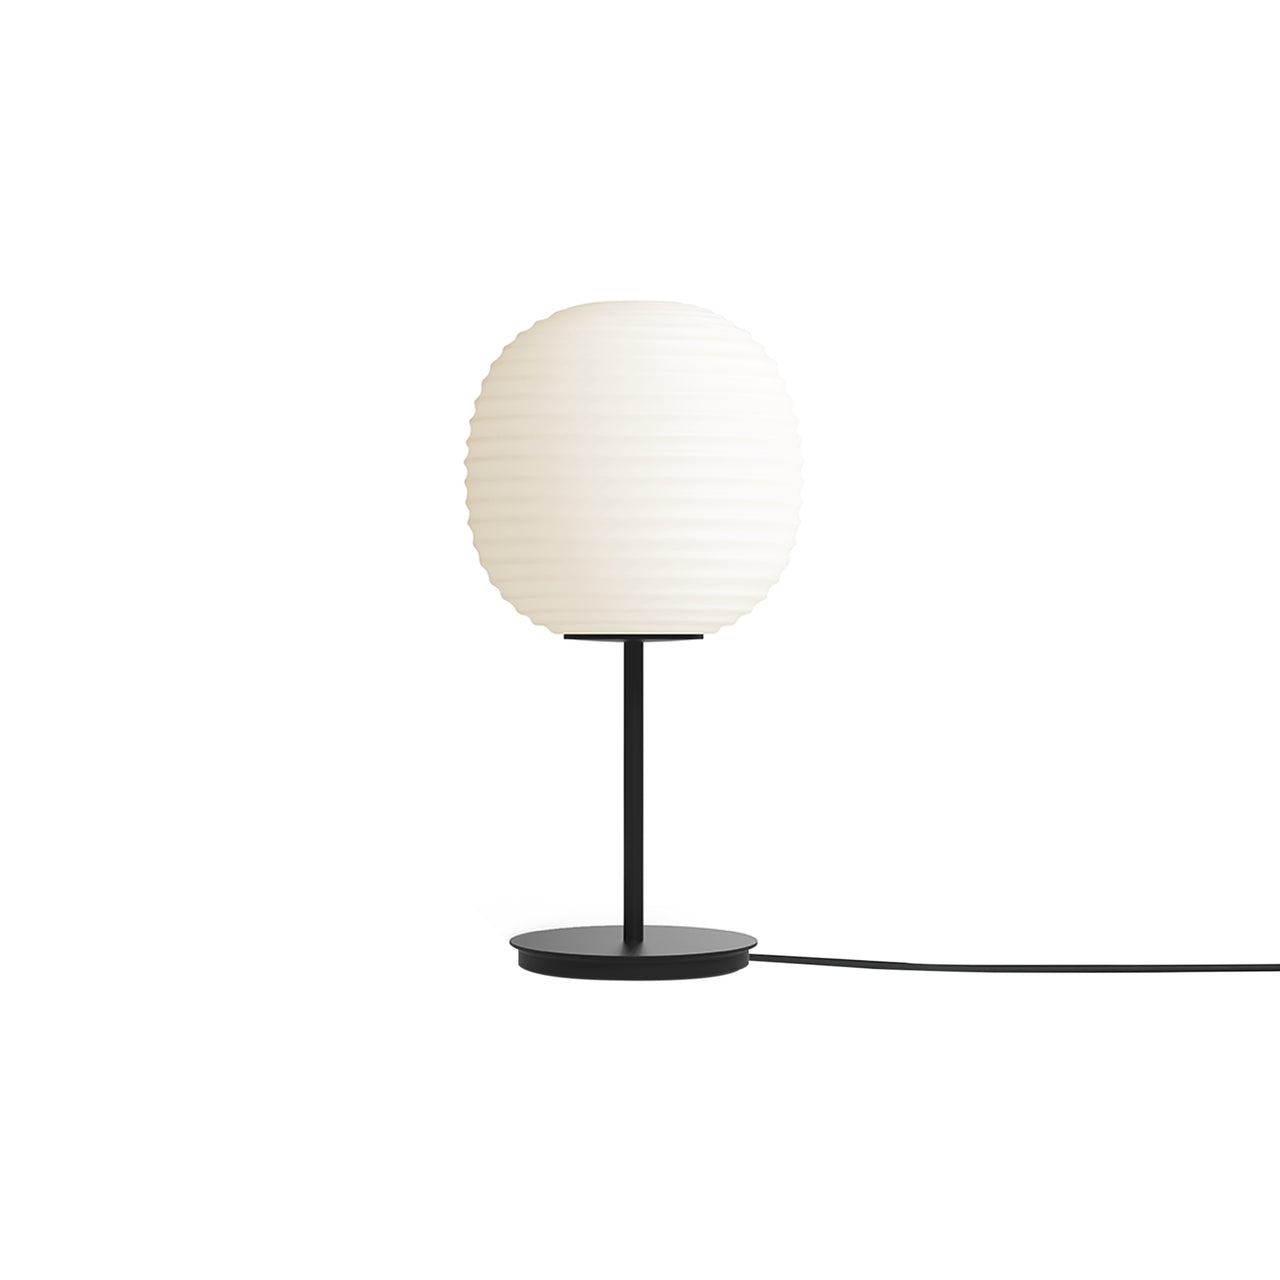 Lantern Table Lamp: Small - 7.9